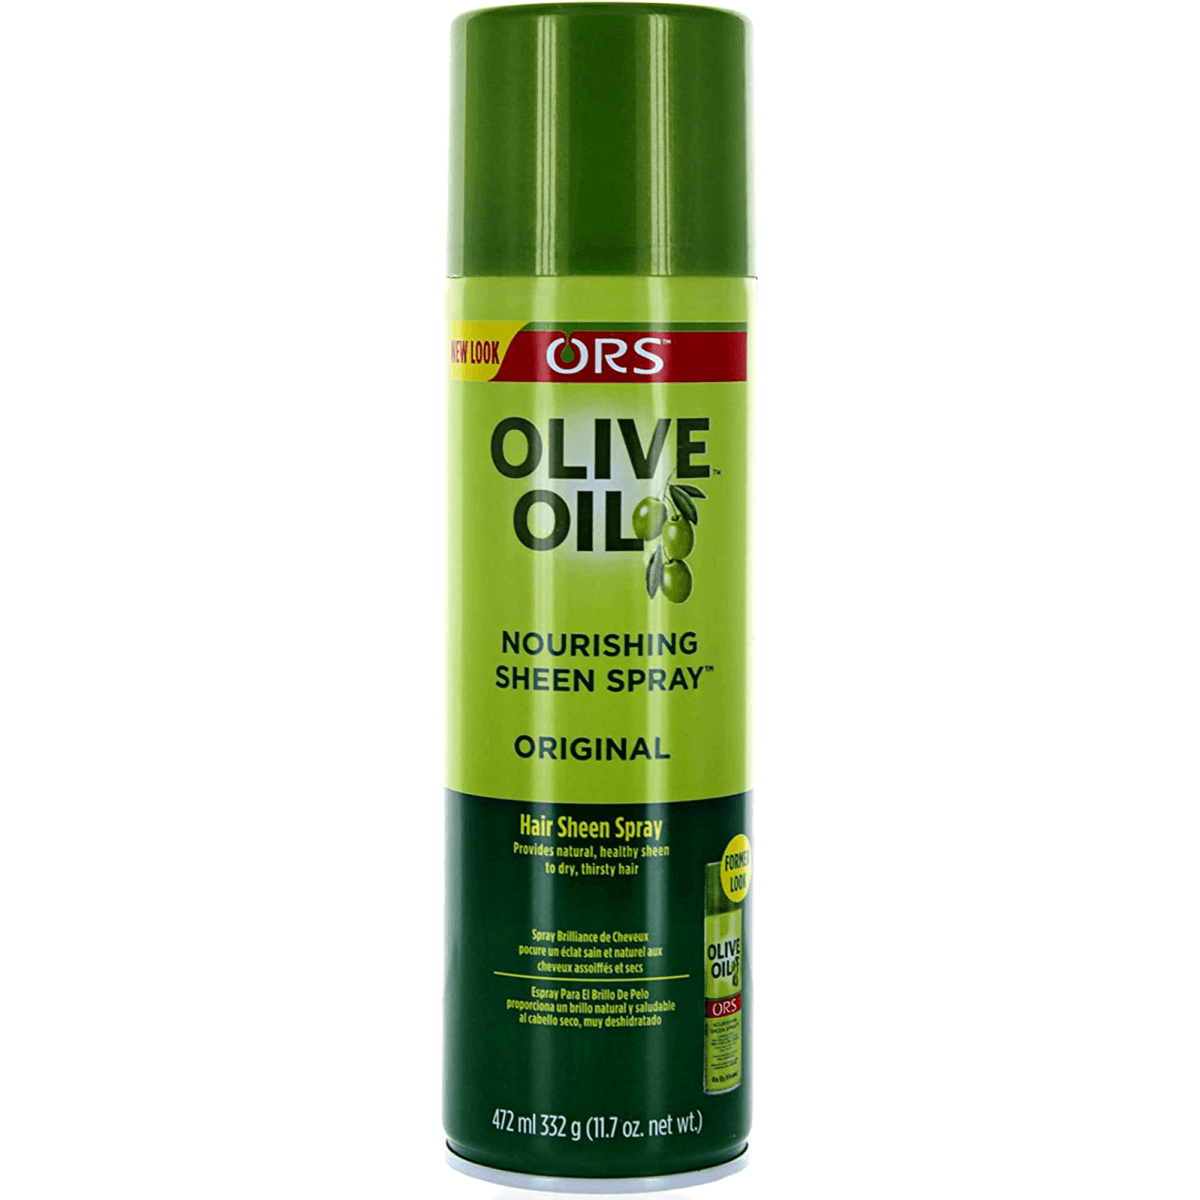 ORS Olive Oil Sheen Spray 11.7 OZ - Original - Hair Plus ME